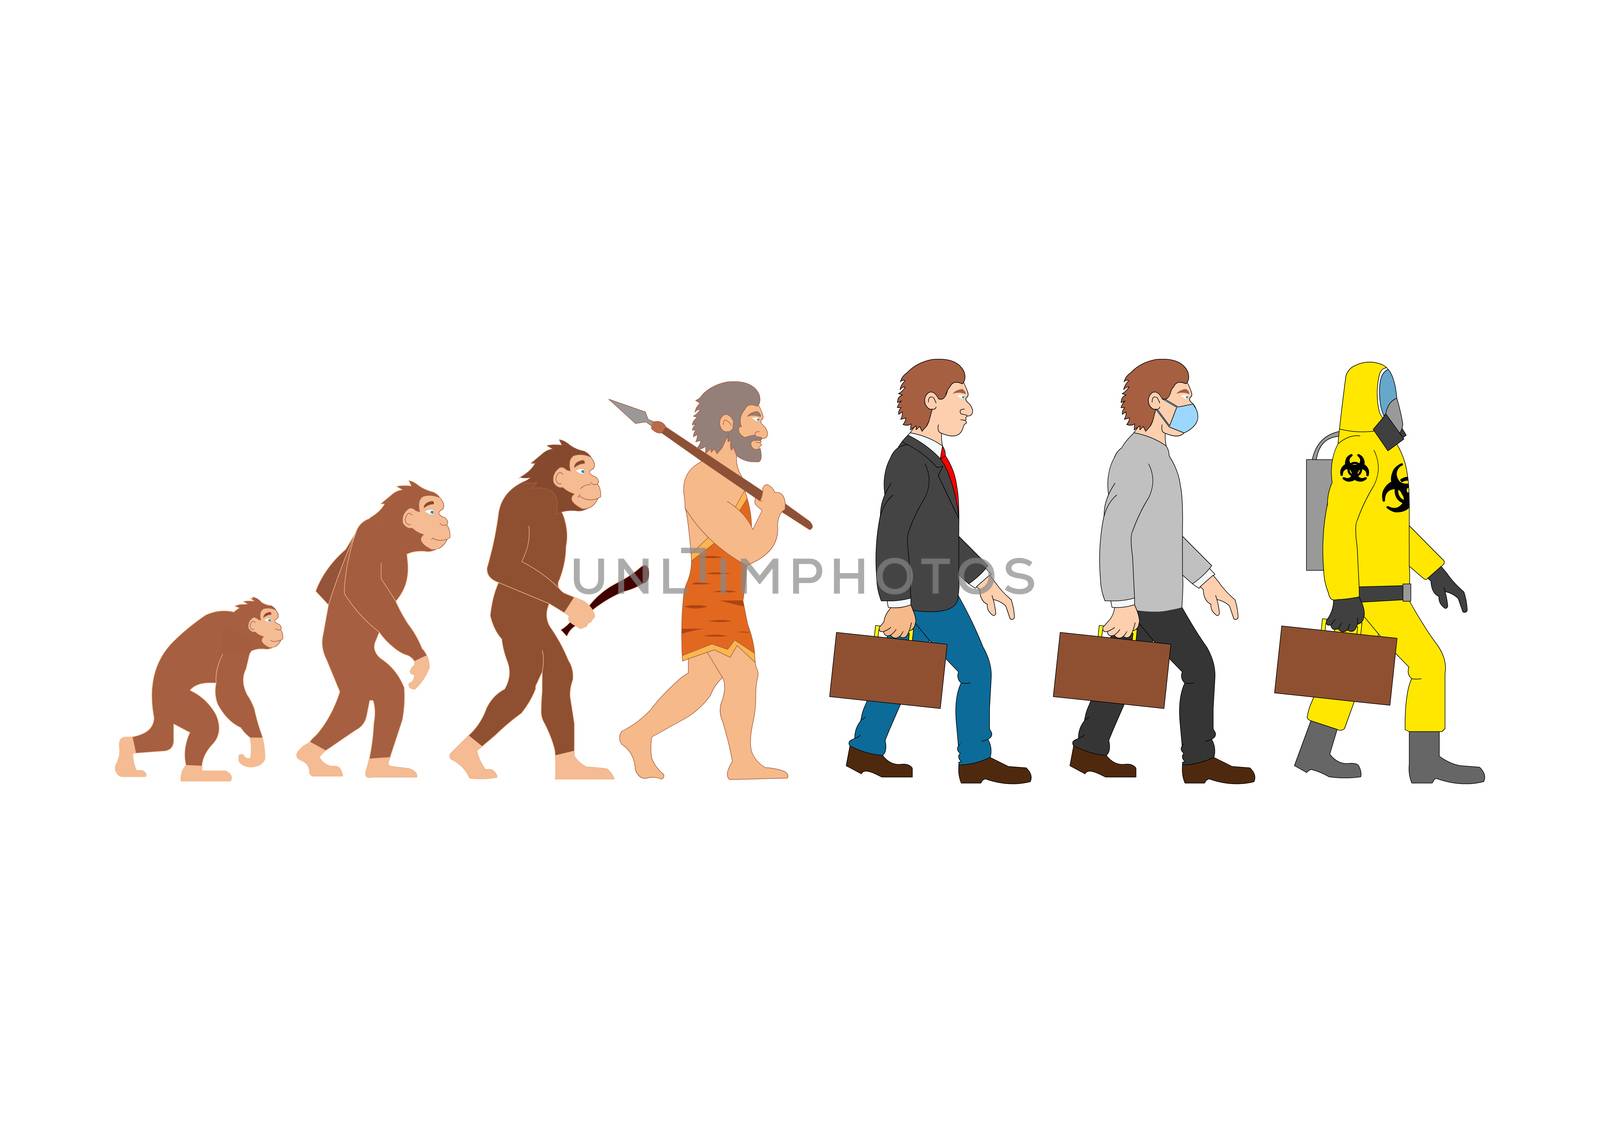 Funny Human Evolution by Bigalbaloo